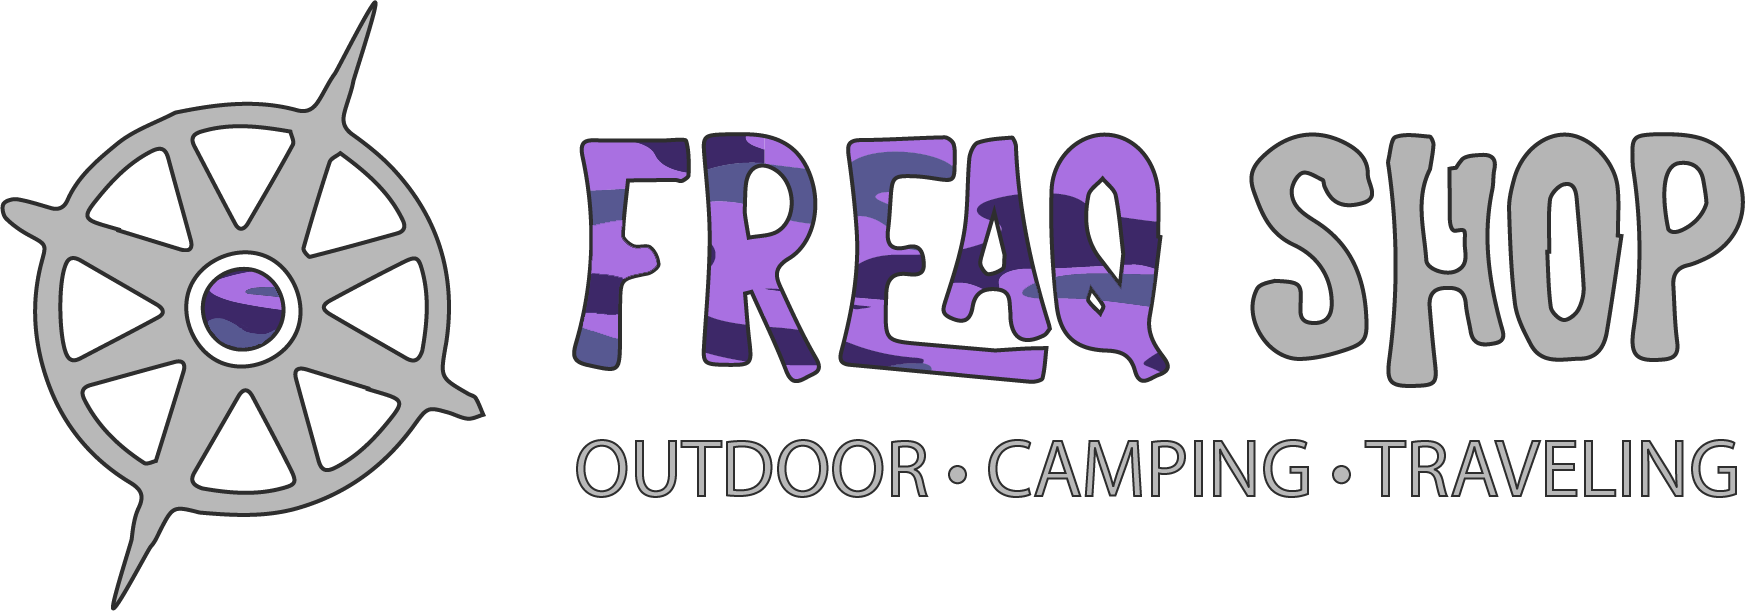 FreaqShop